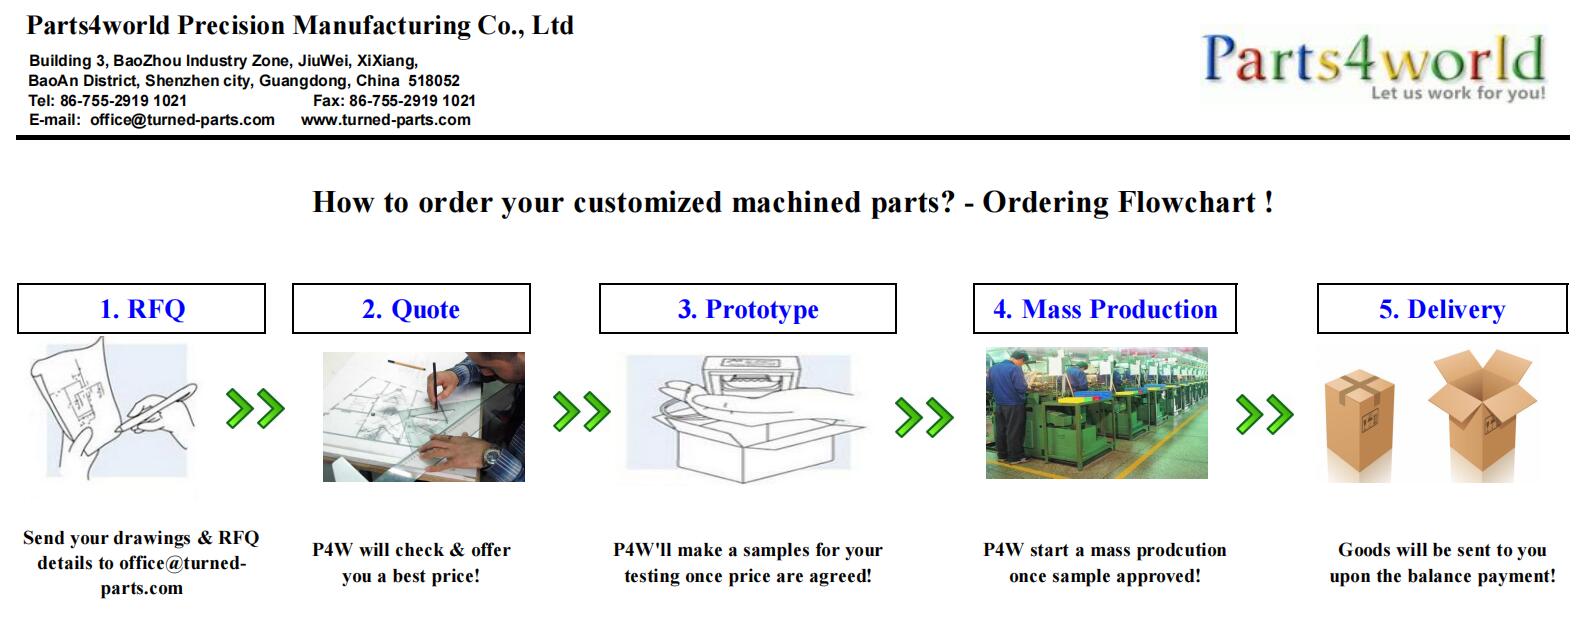 Ordering flowchart for custom turned parts